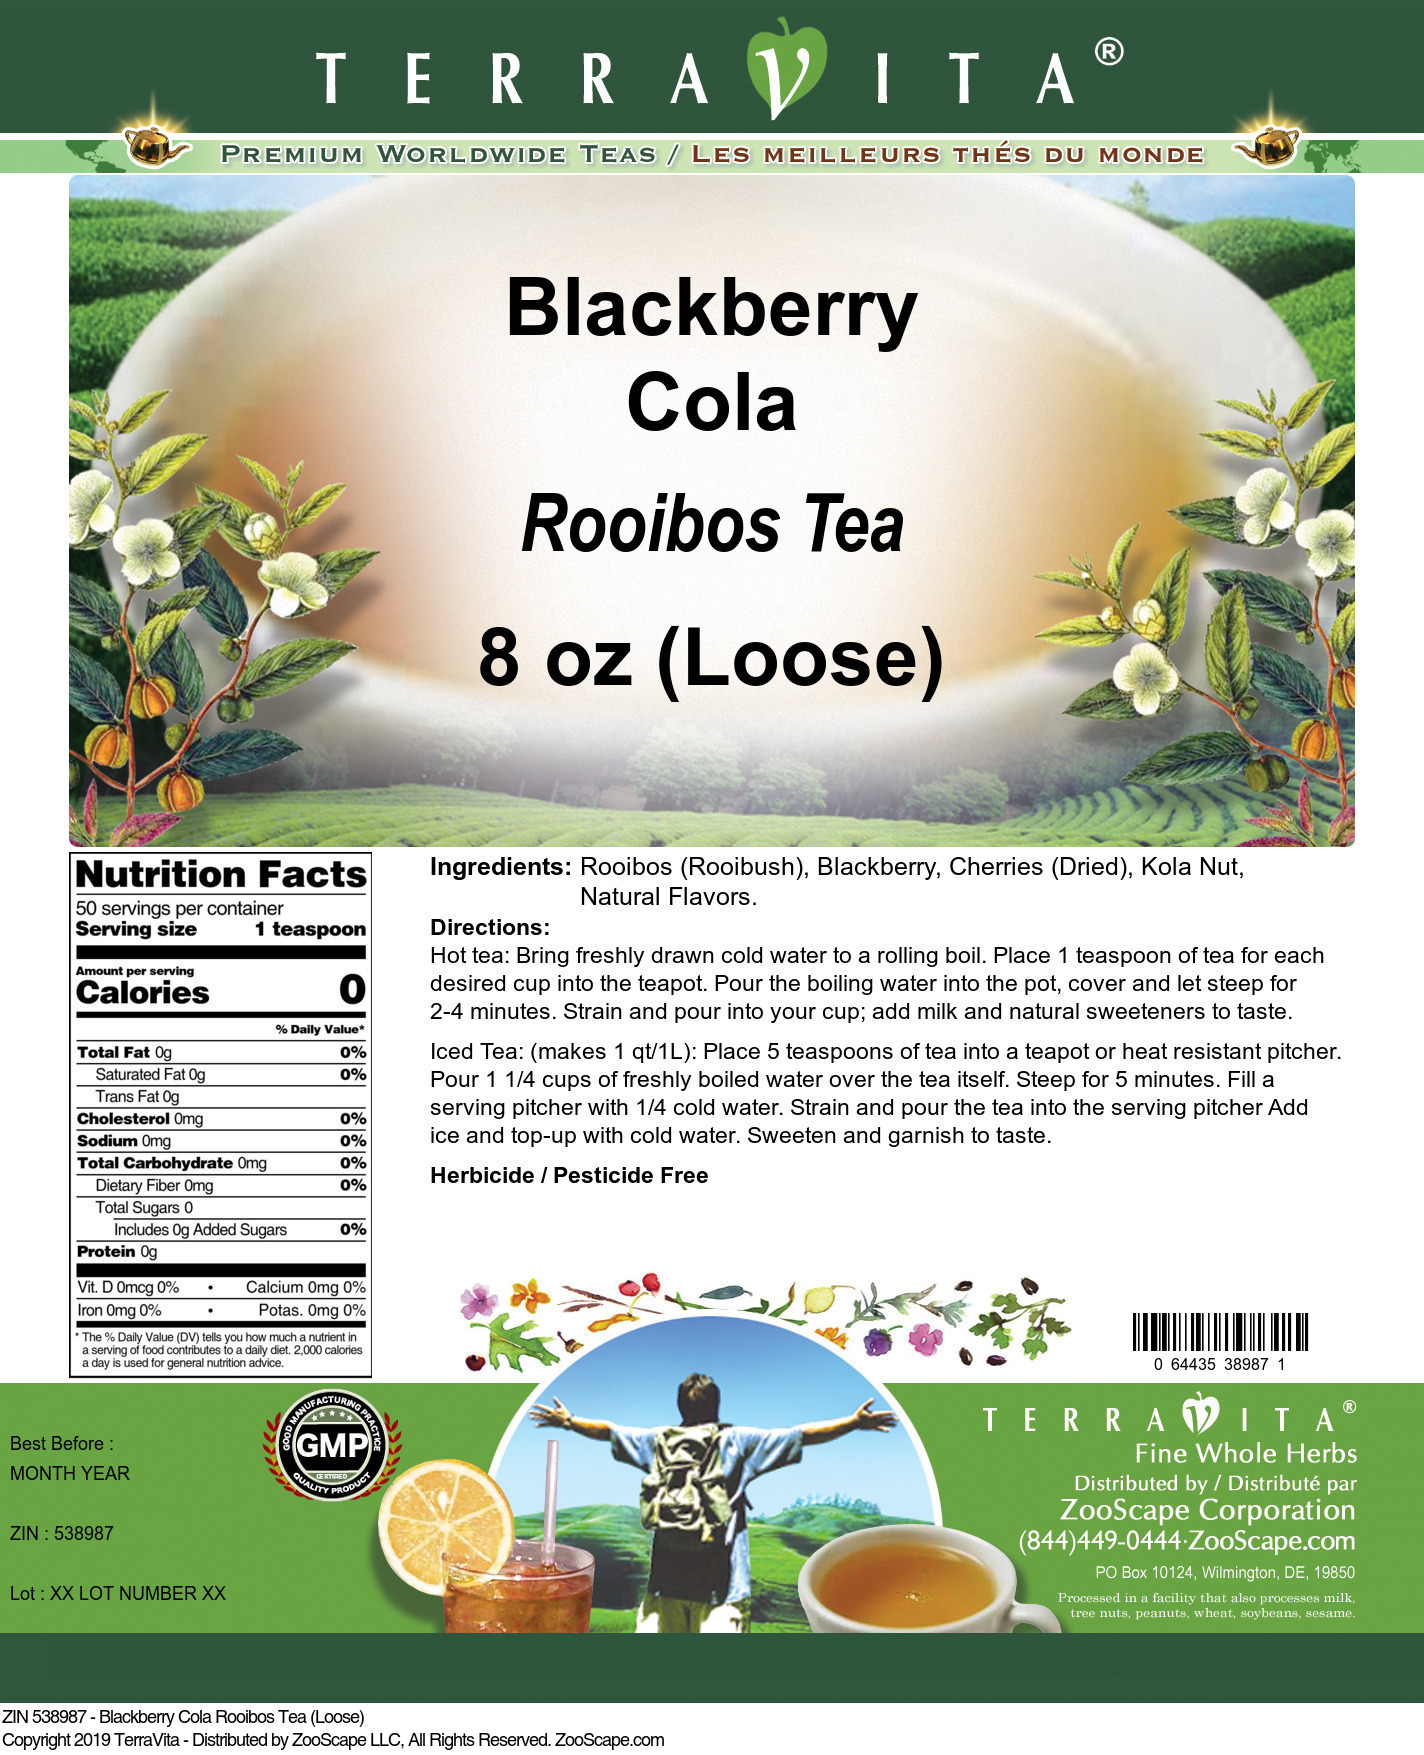 Blackberry Cola Rooibos Tea (Loose) - Label